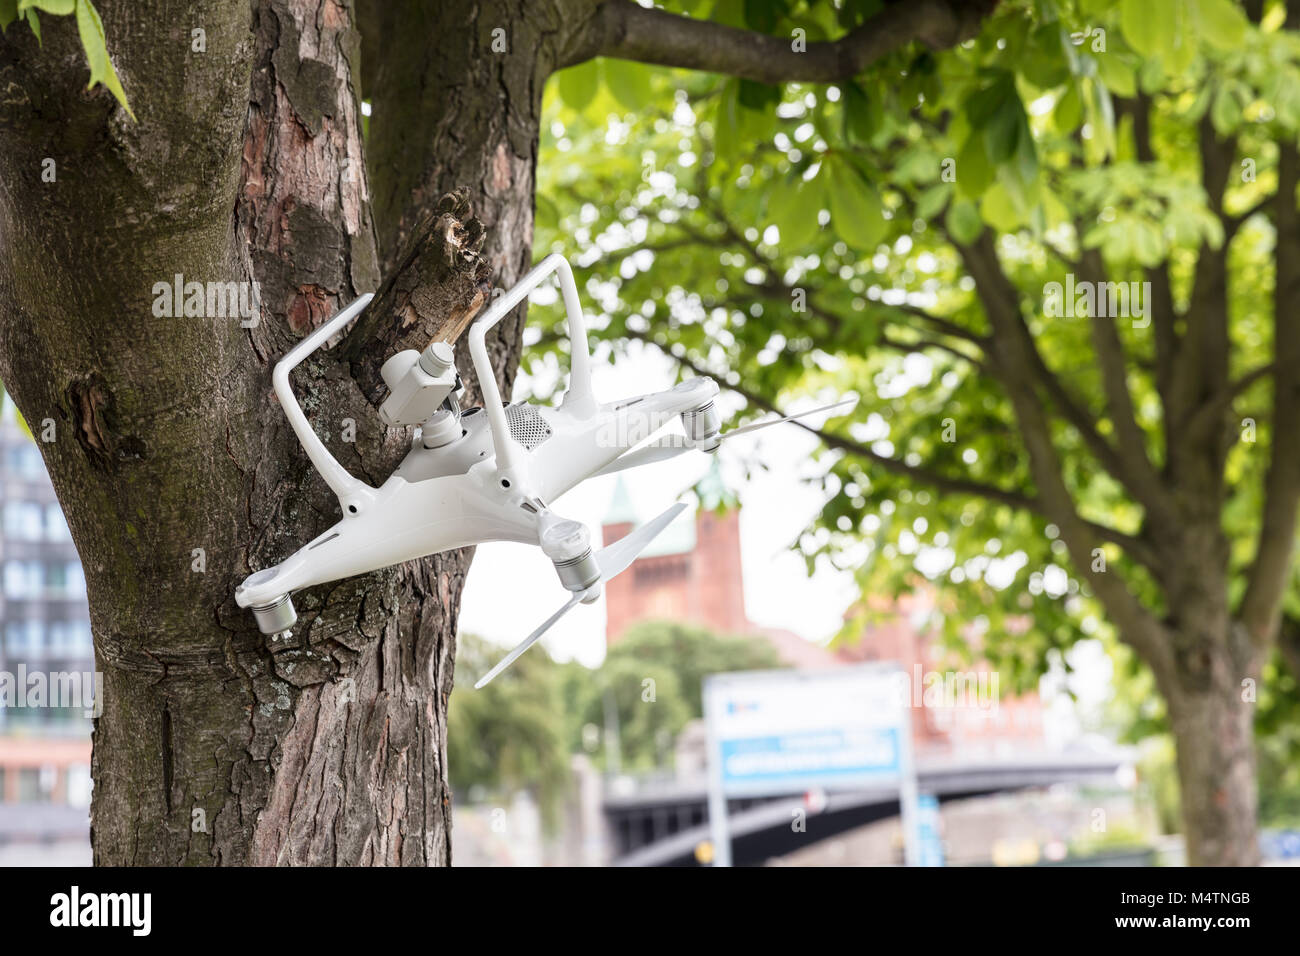 Close-up Of Flying White Drone Crashing On Tree Trunk Stock Photo